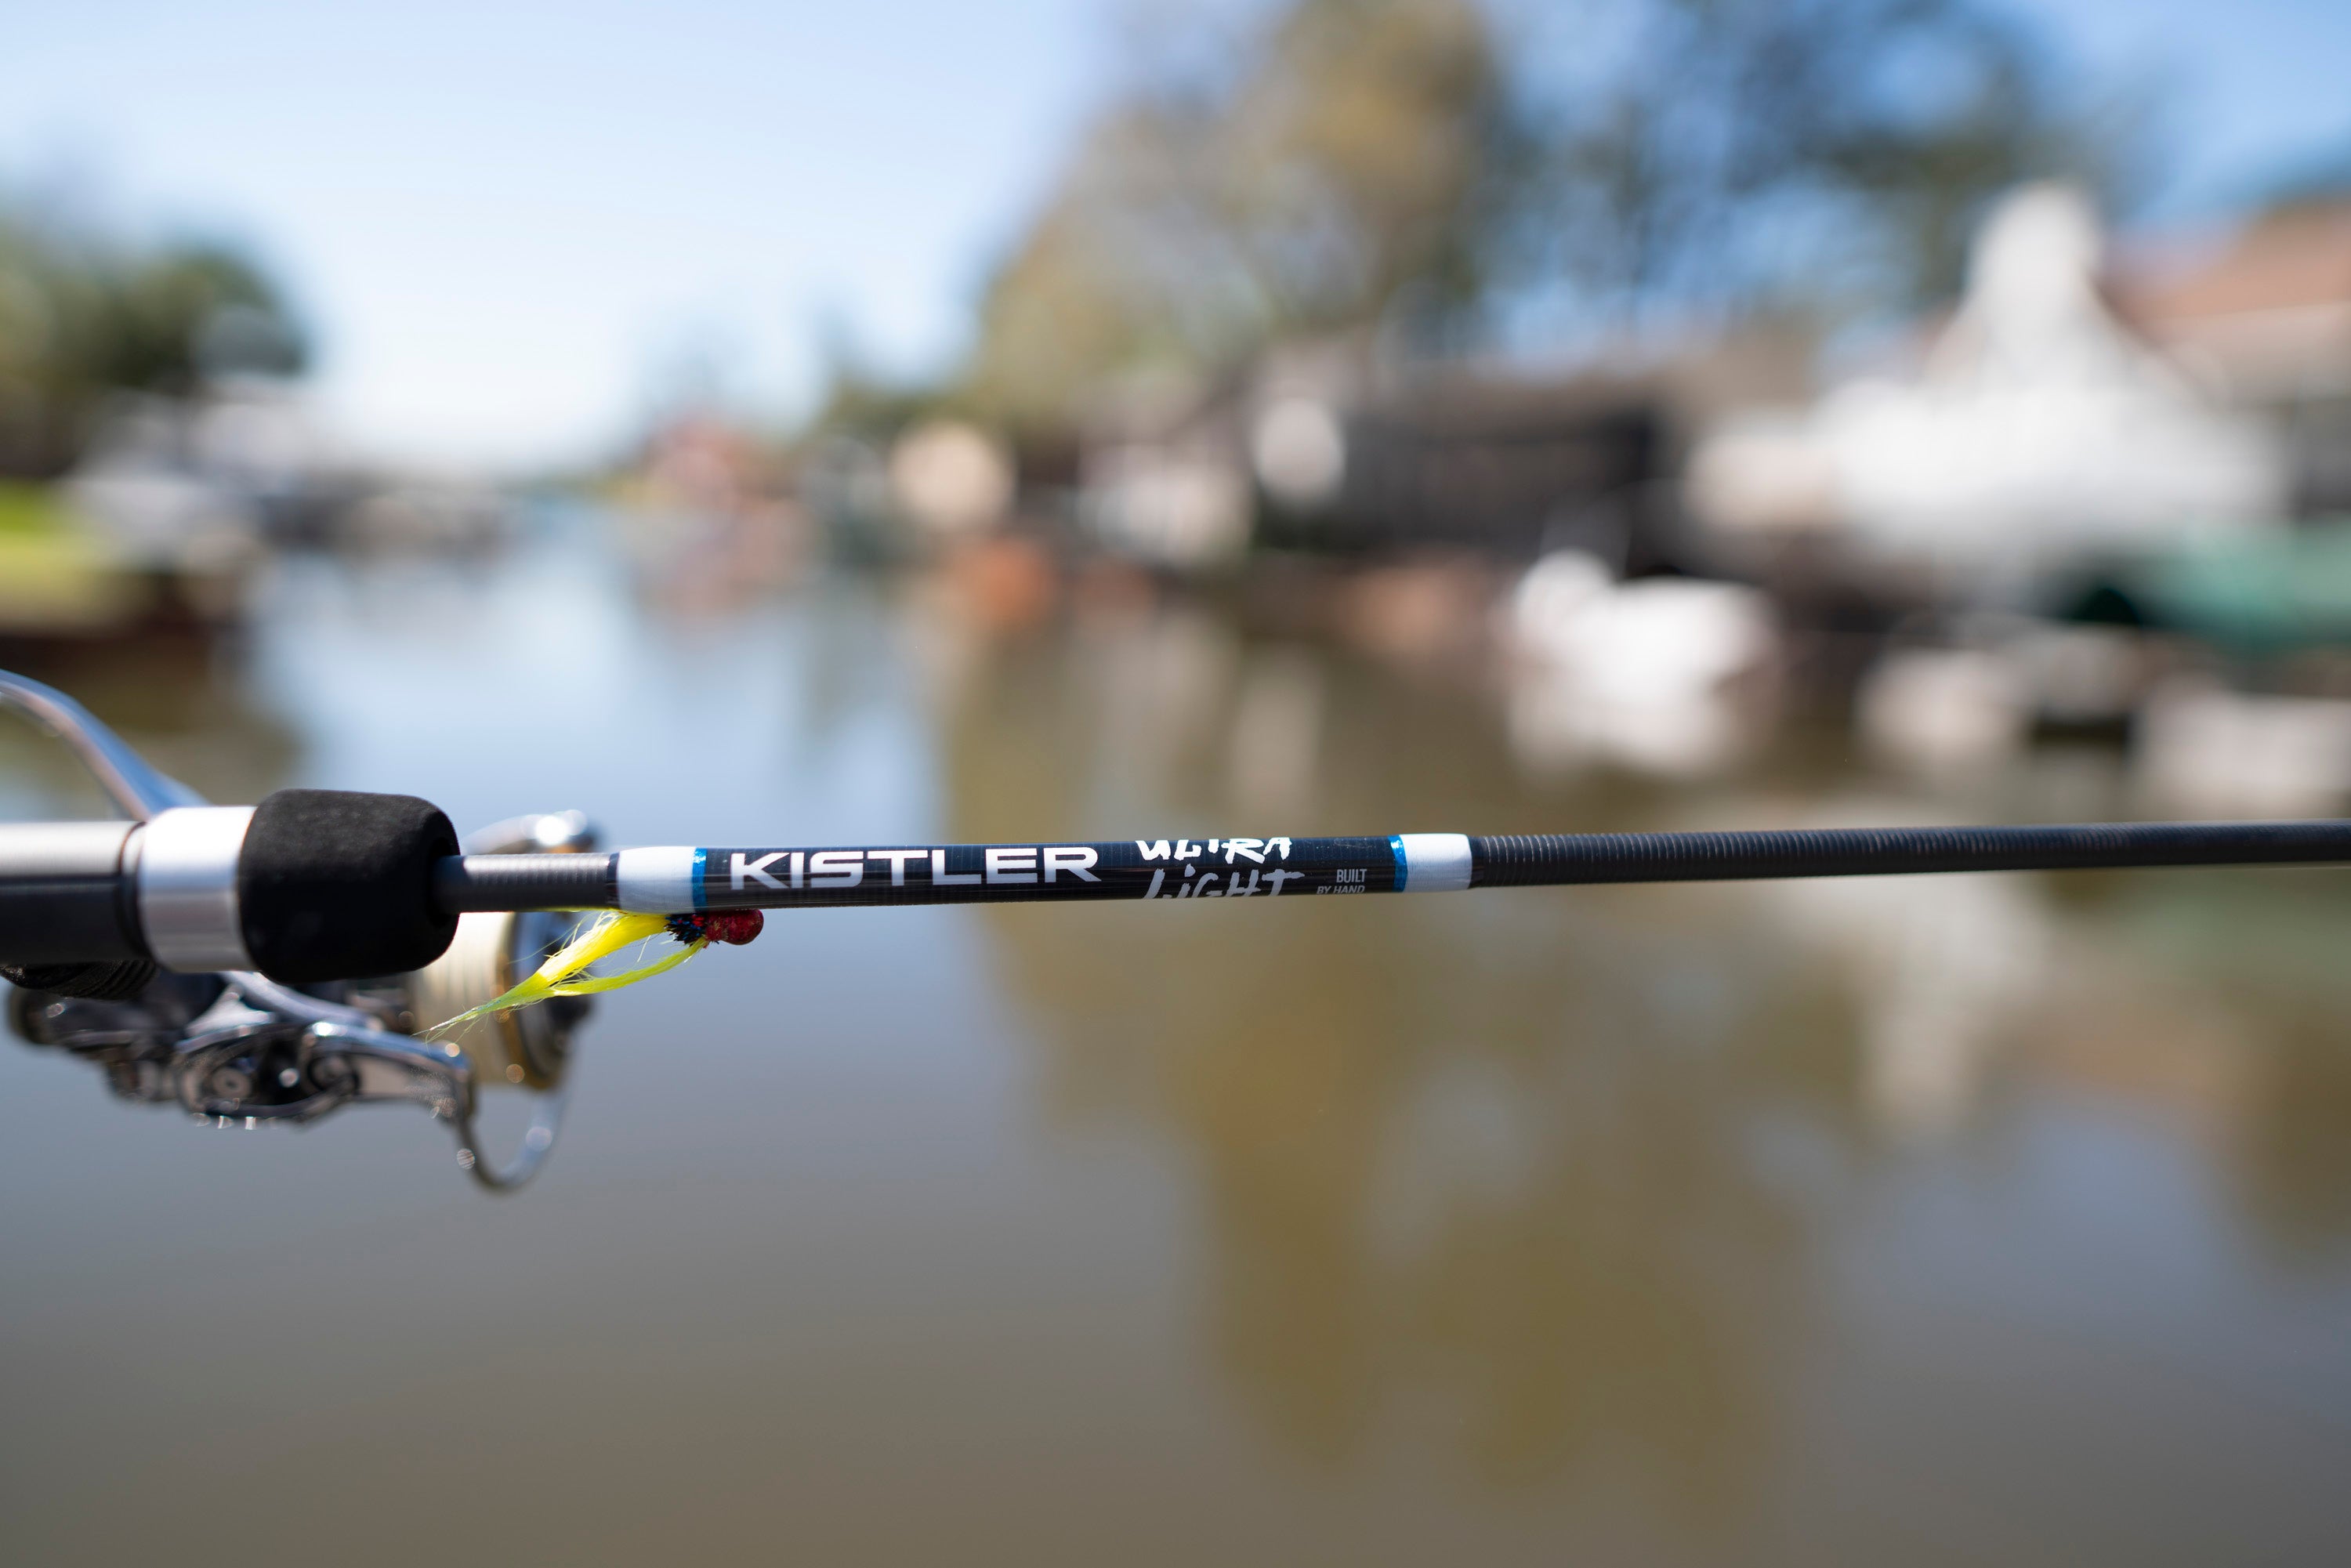 5'5” ultra light rod, 500 size reel, 4lb mono while fishing a